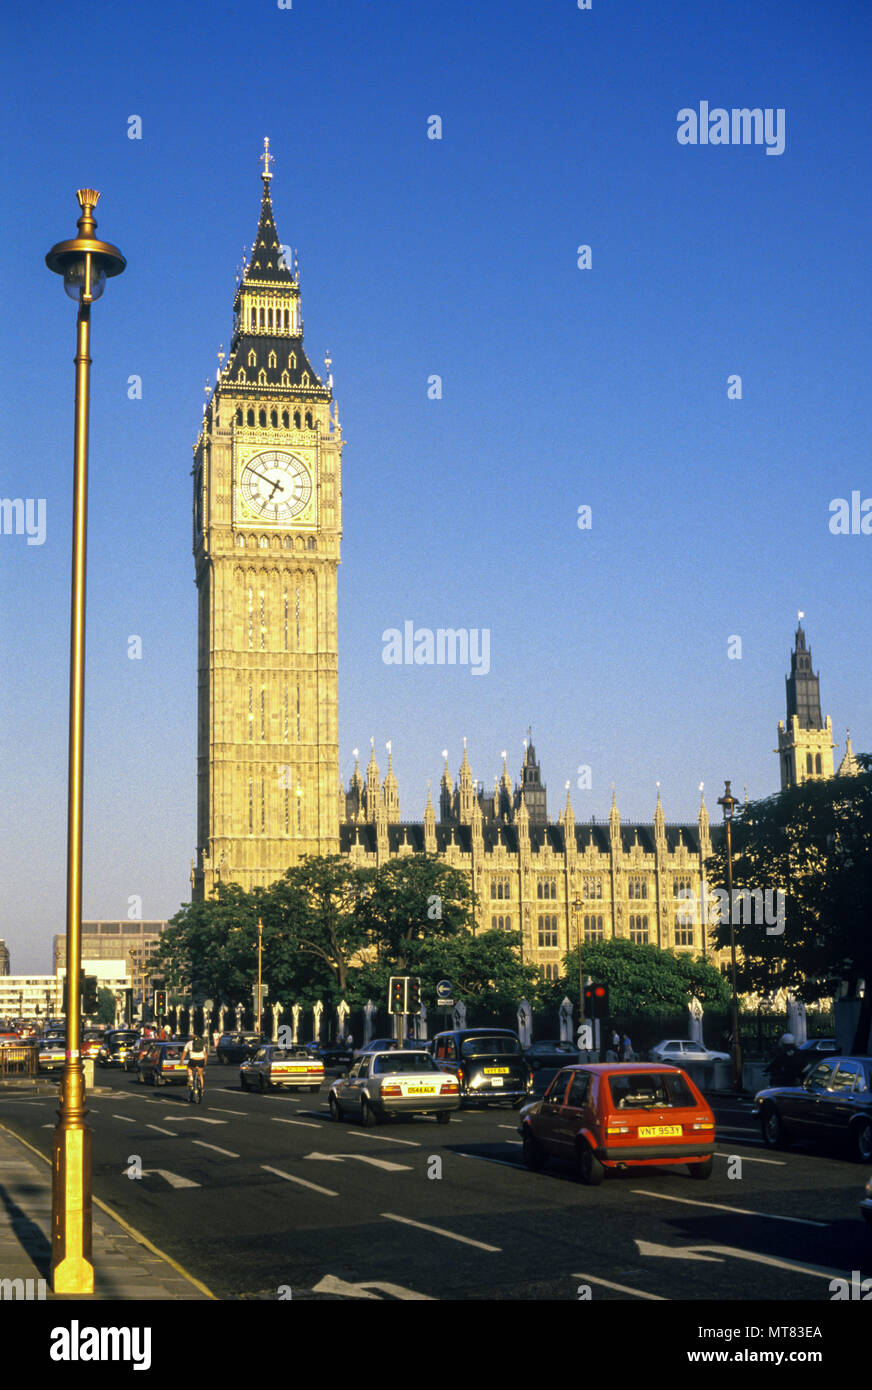 1988 HISTORICAL BIG BEN PARLIAMENT SQUARE LONDON ENGLAND UK Stock Photo